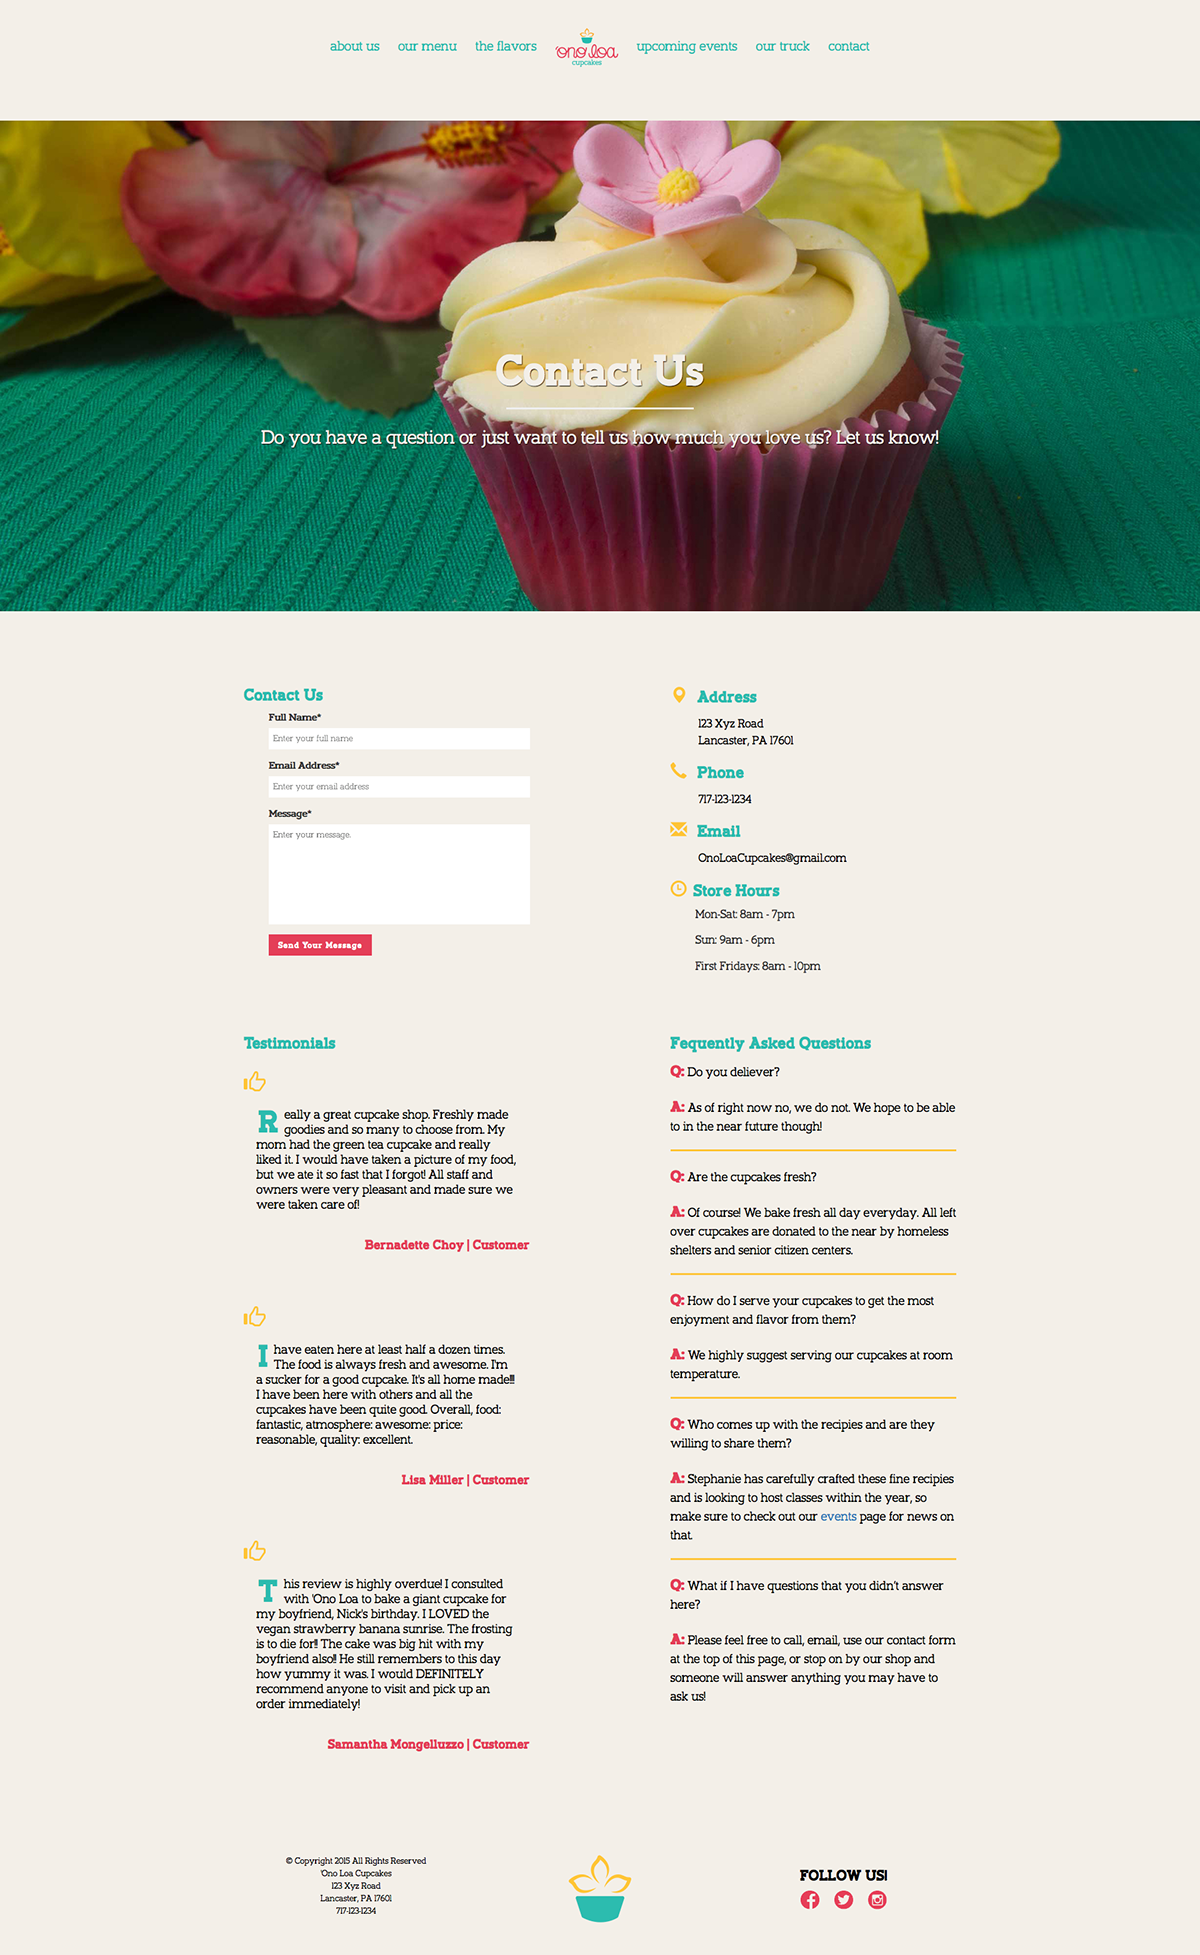 cupcake bakery HAWAII logo responsive website mobile tablet iphone iPad iMac macbook baking Flowers Tropical cupcakes